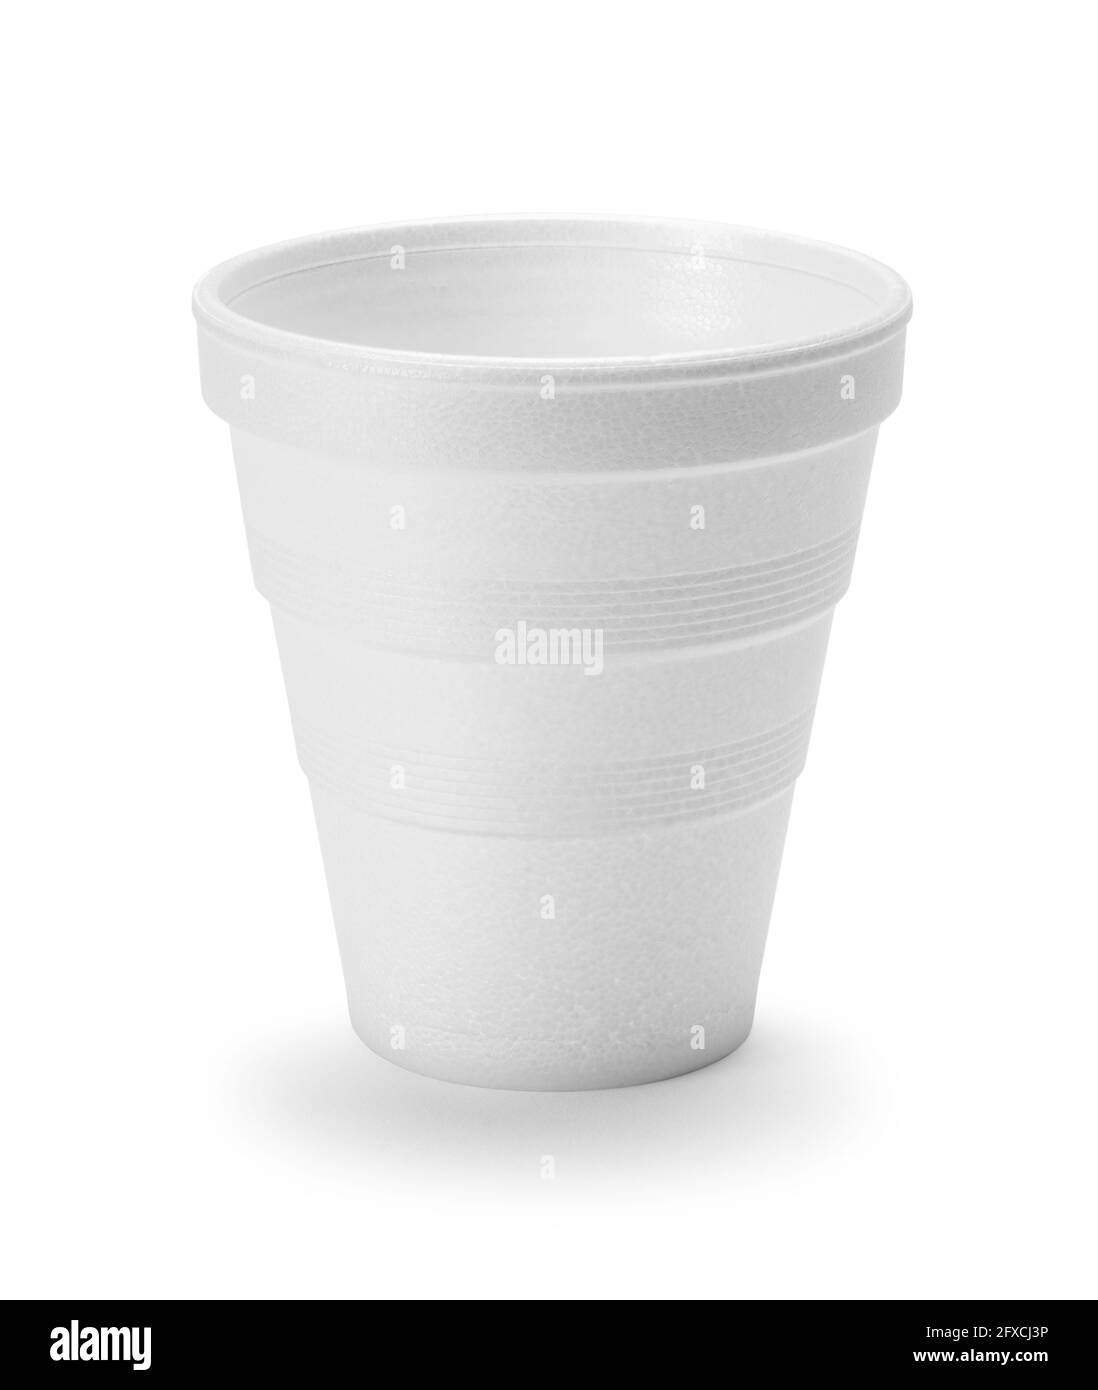 https://c8.alamy.com/comp/2FXCJ3P/small-styrofoam-cup-cut-out-on-white-2FXCJ3P.jpg